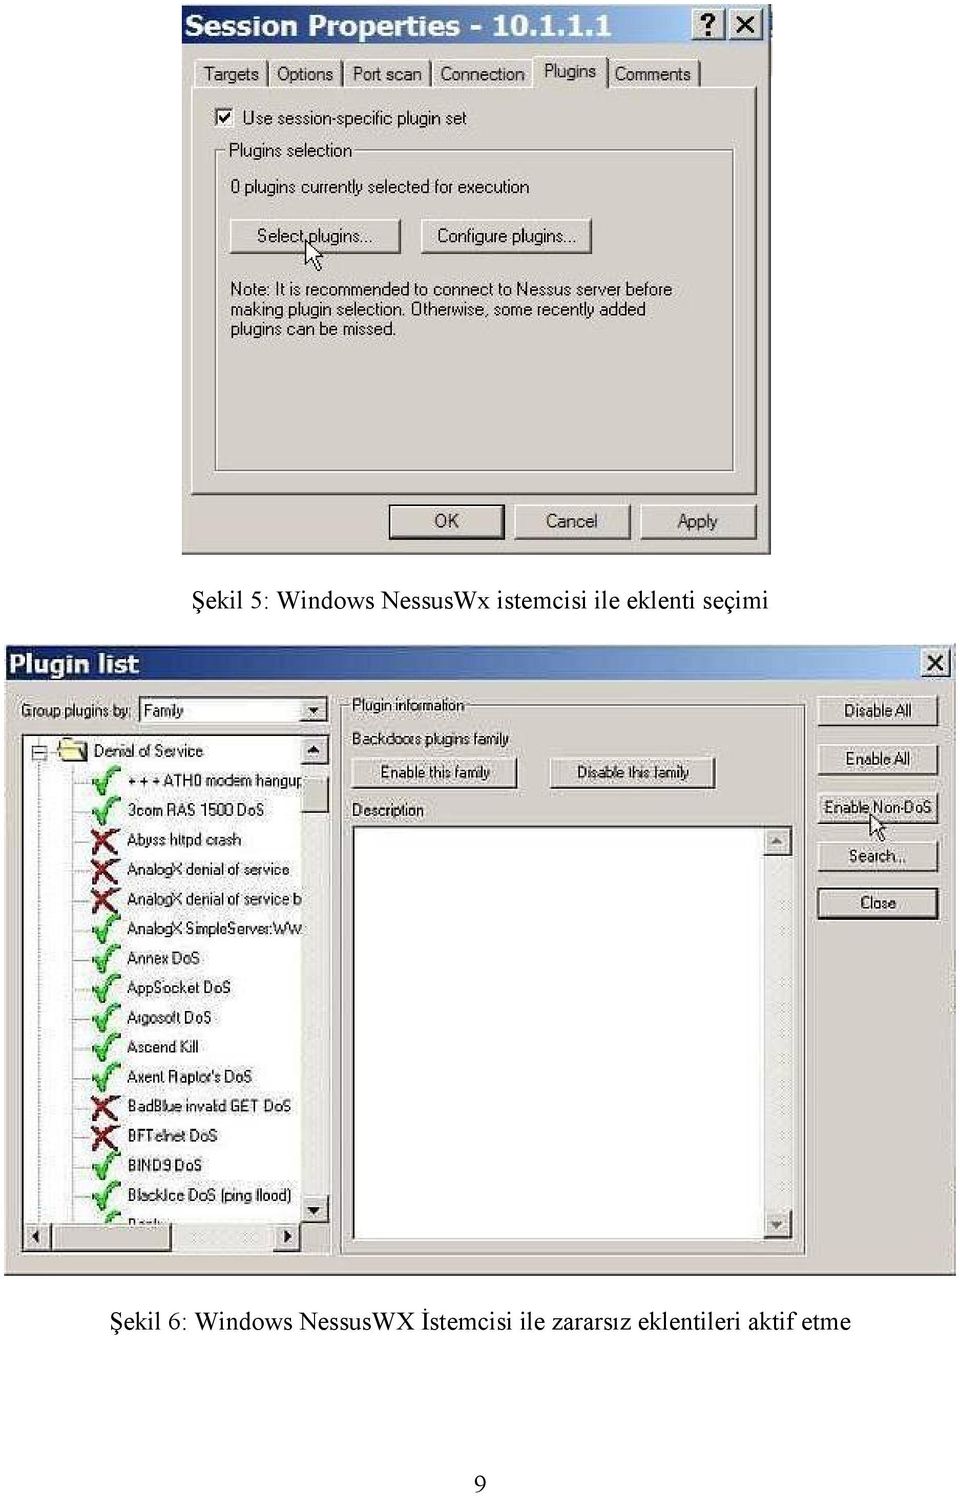 Şekil 6: Windows NessusWX